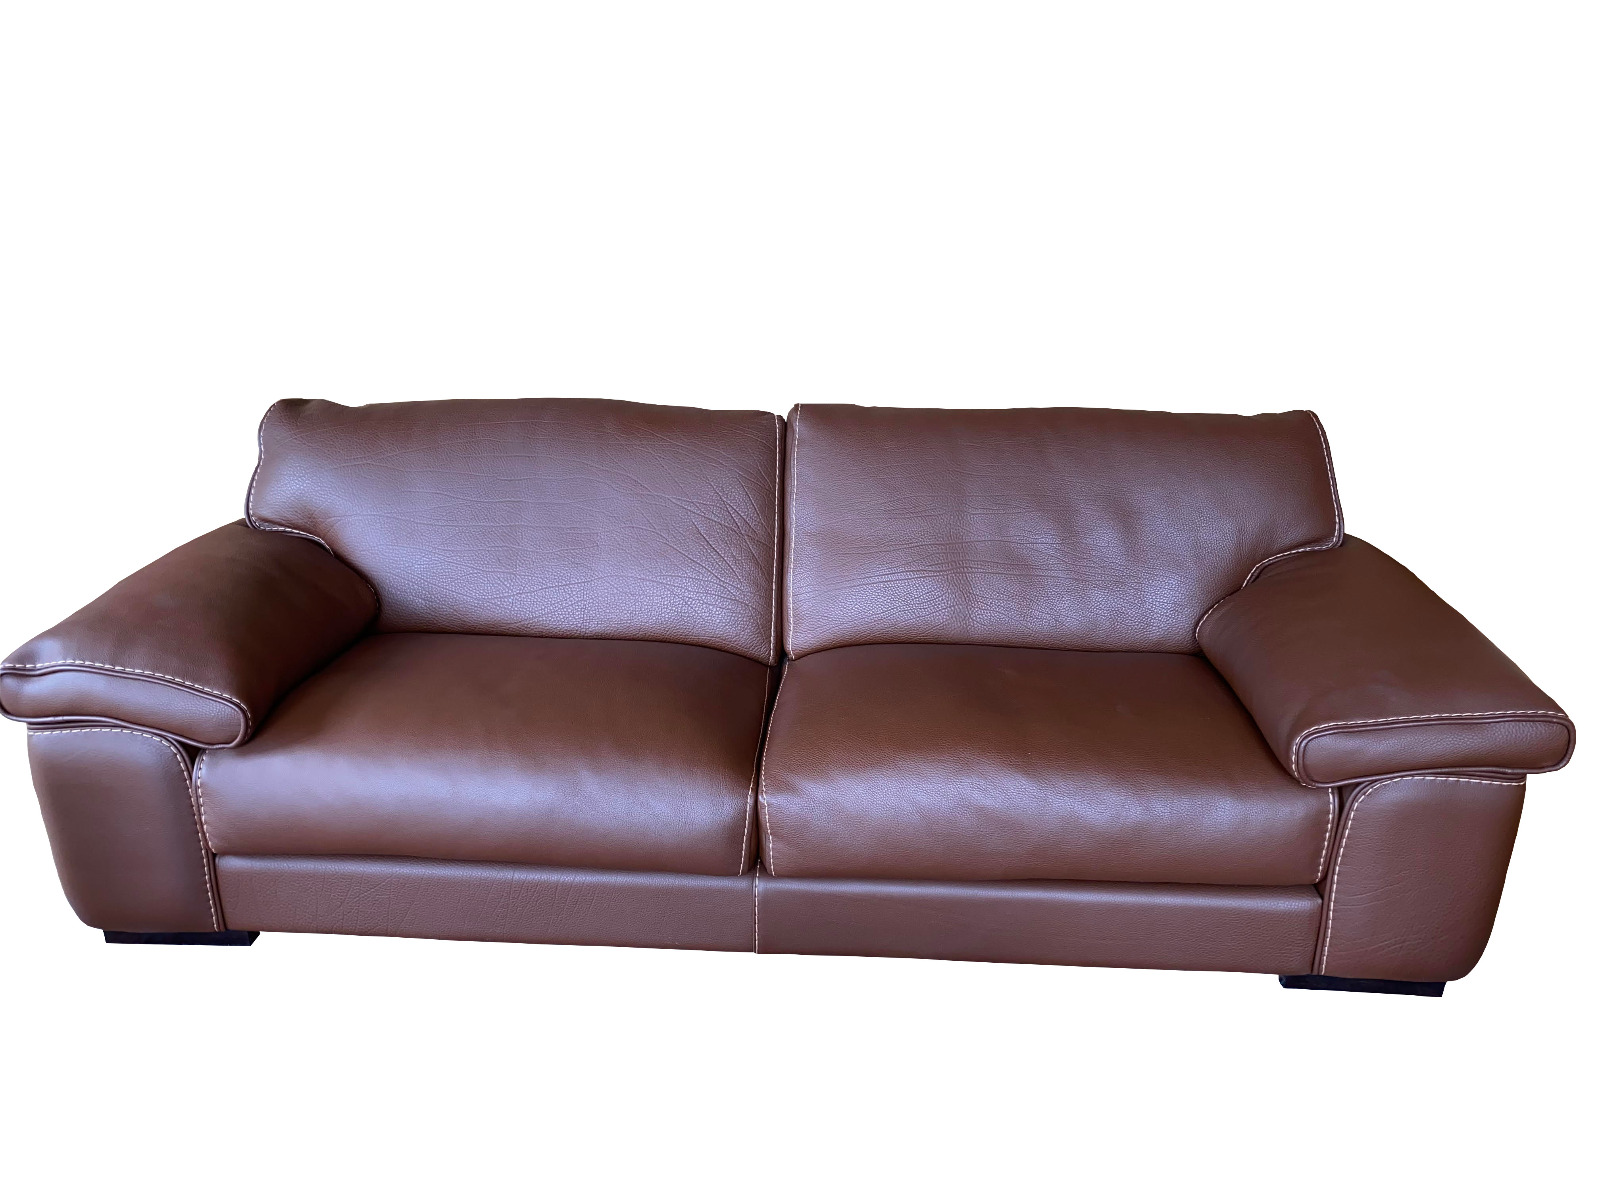 Buy Roche Bobois ASCOT Leather 3-Seat Sofa Online, price